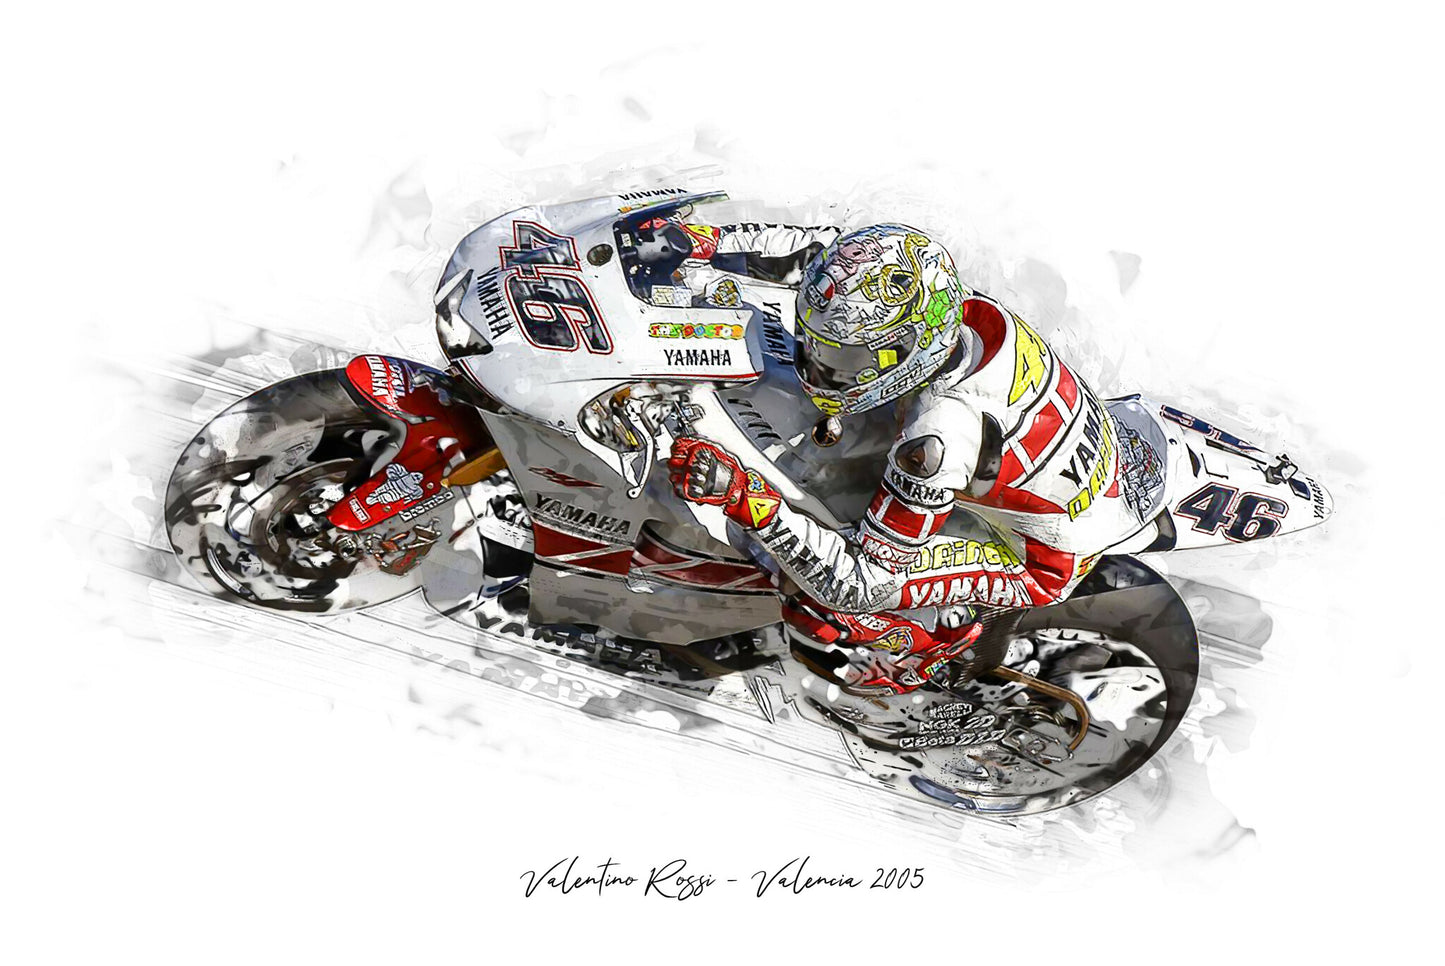 Valentino Rossi - Valencia 2005 - Kunstdruck gerahmt - 40 x 30  cm